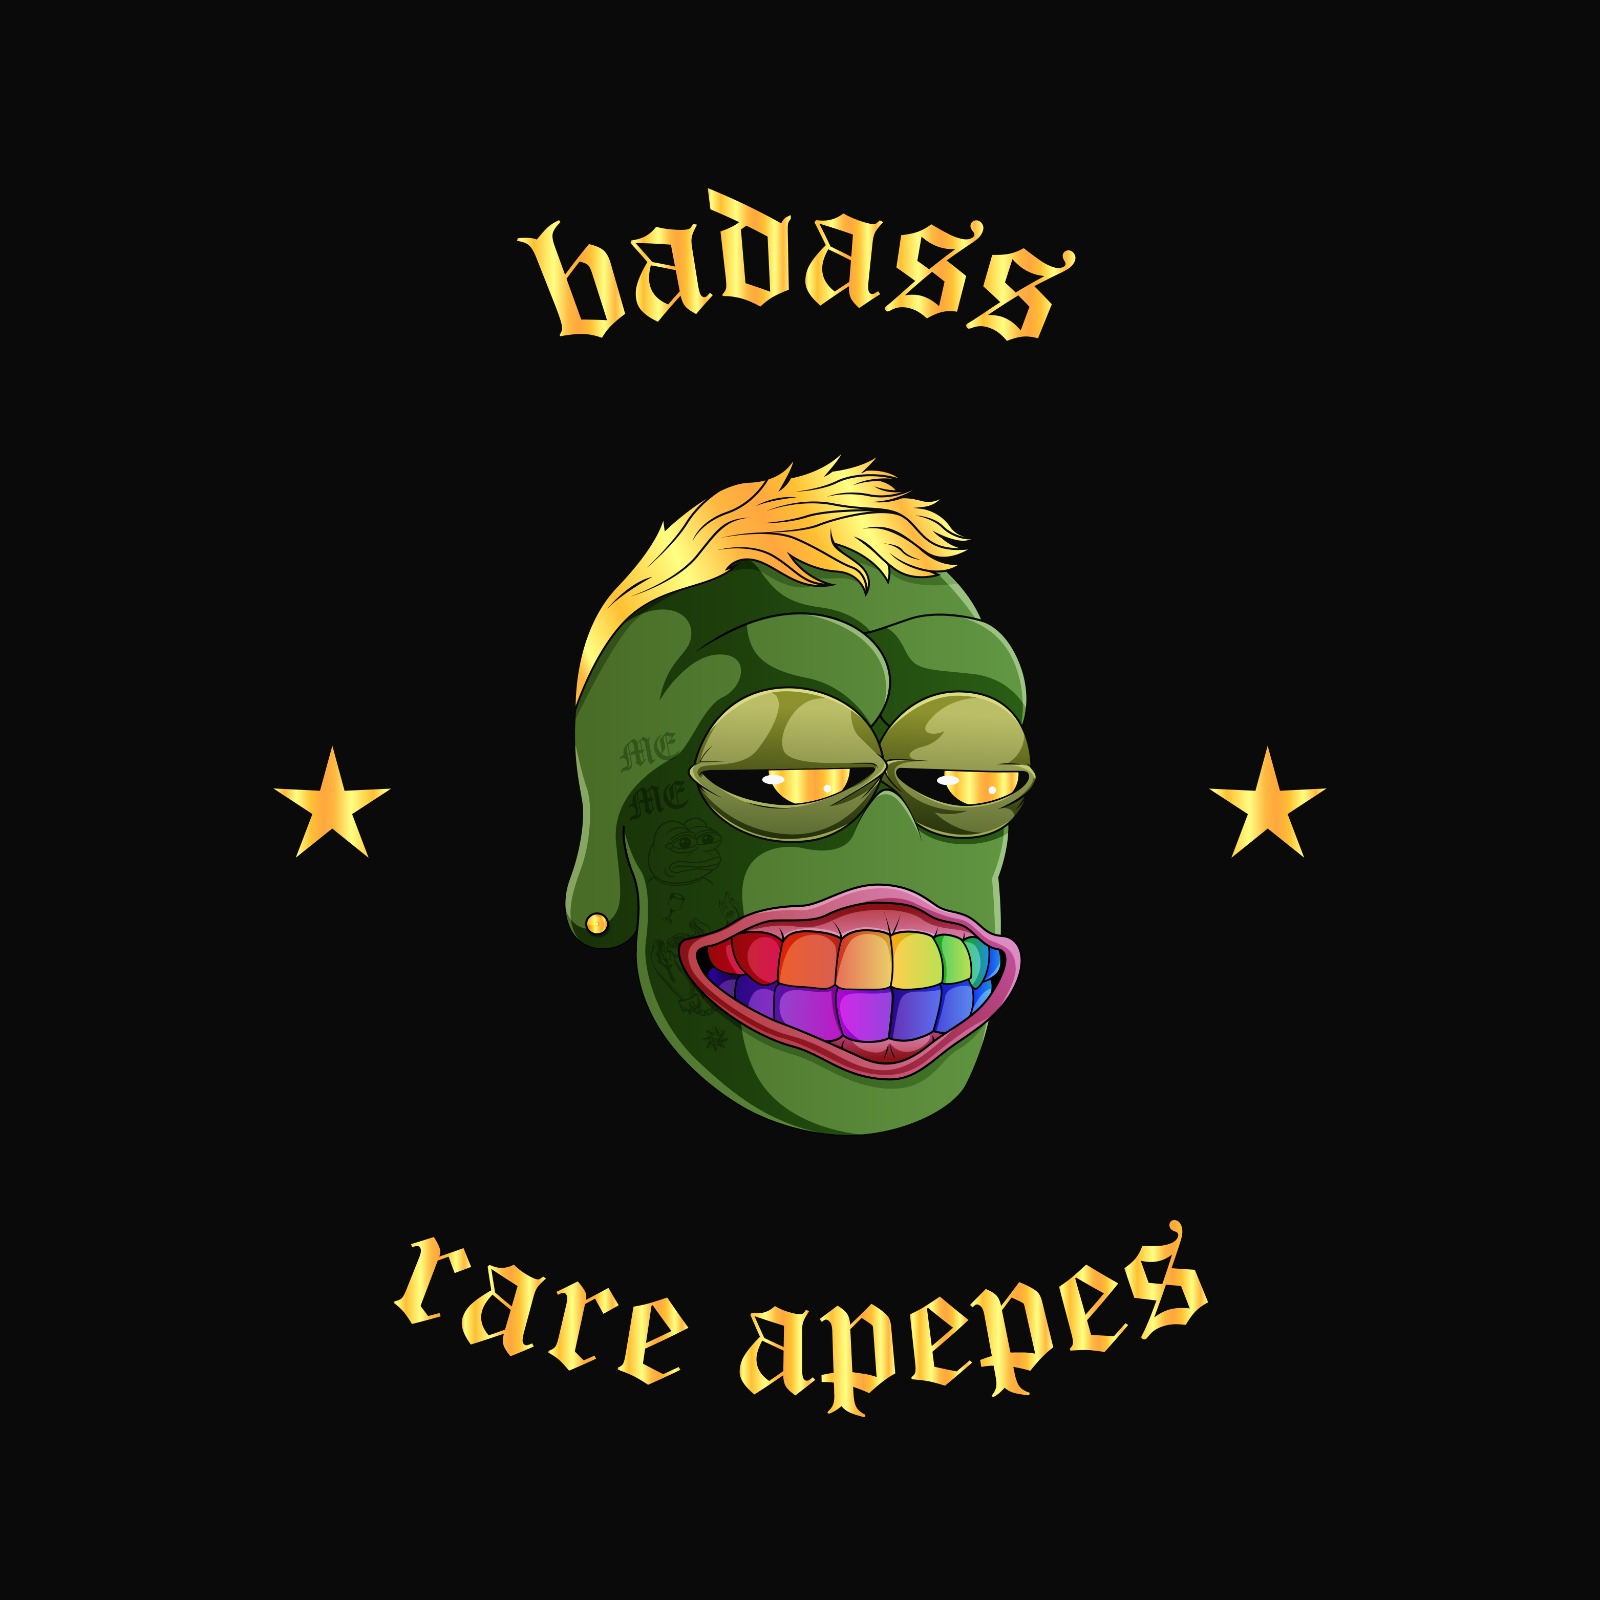 Badass Rare Apepes